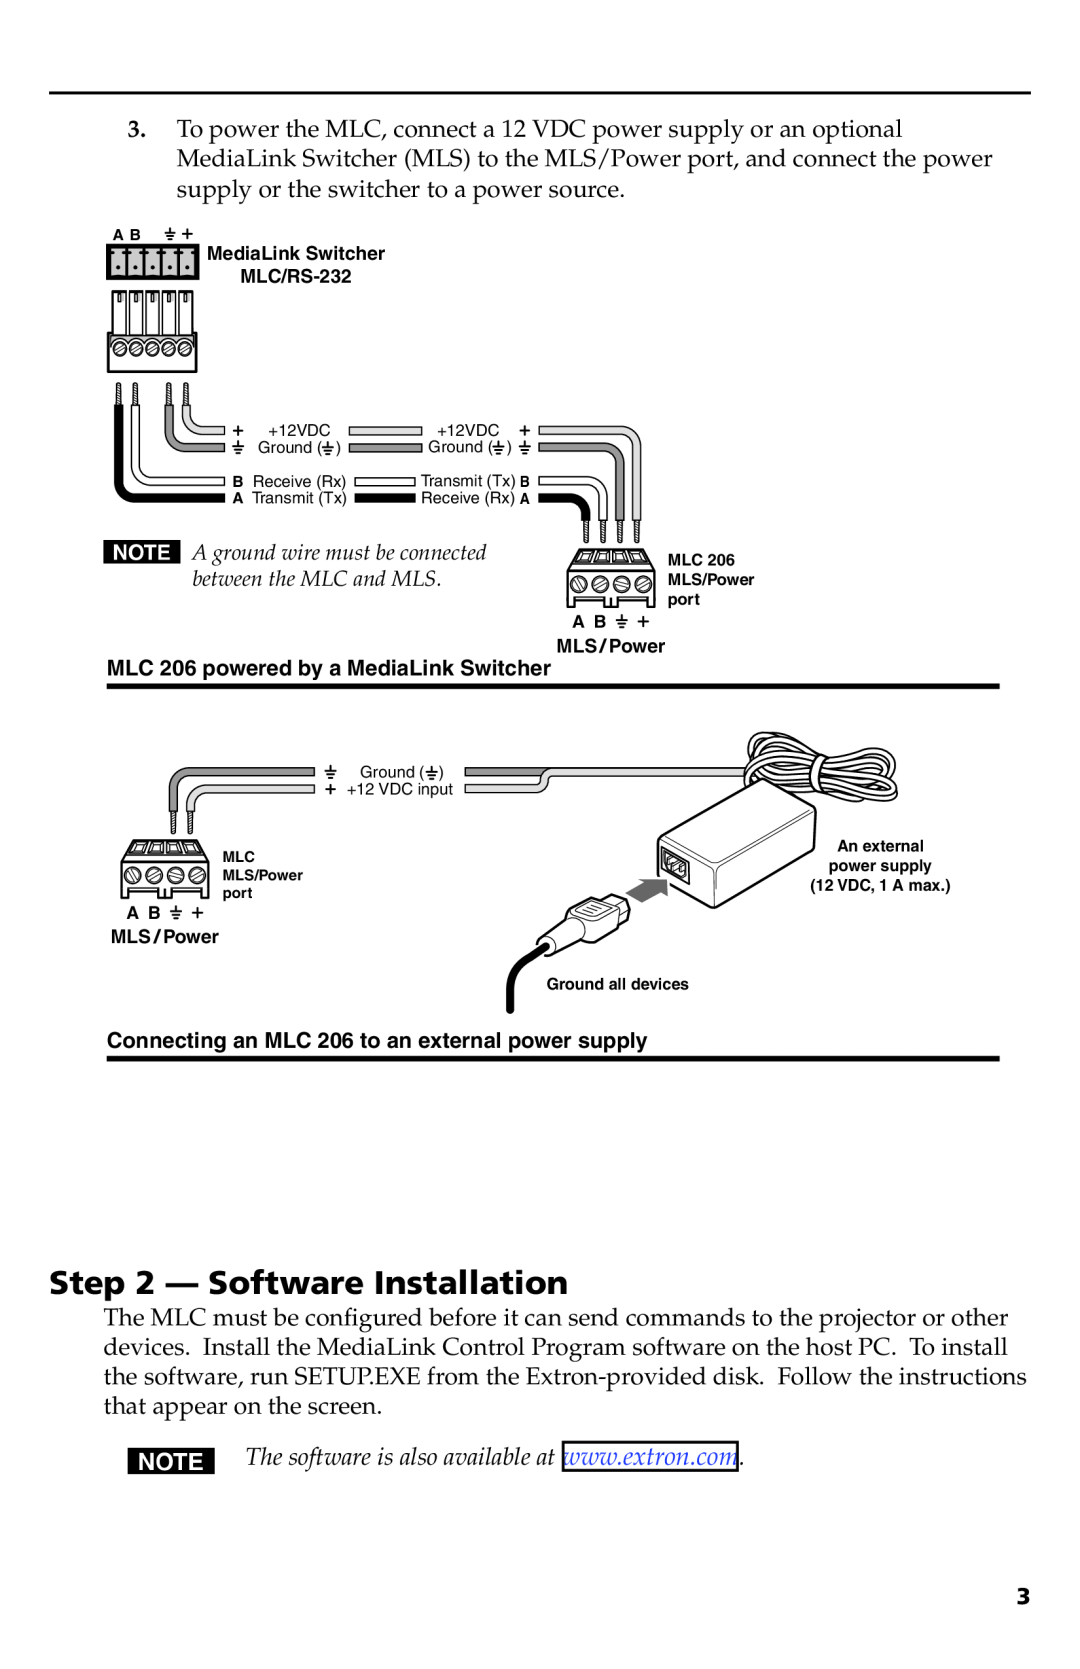 Extron electronic MLC 206 setup guide Software Installation 